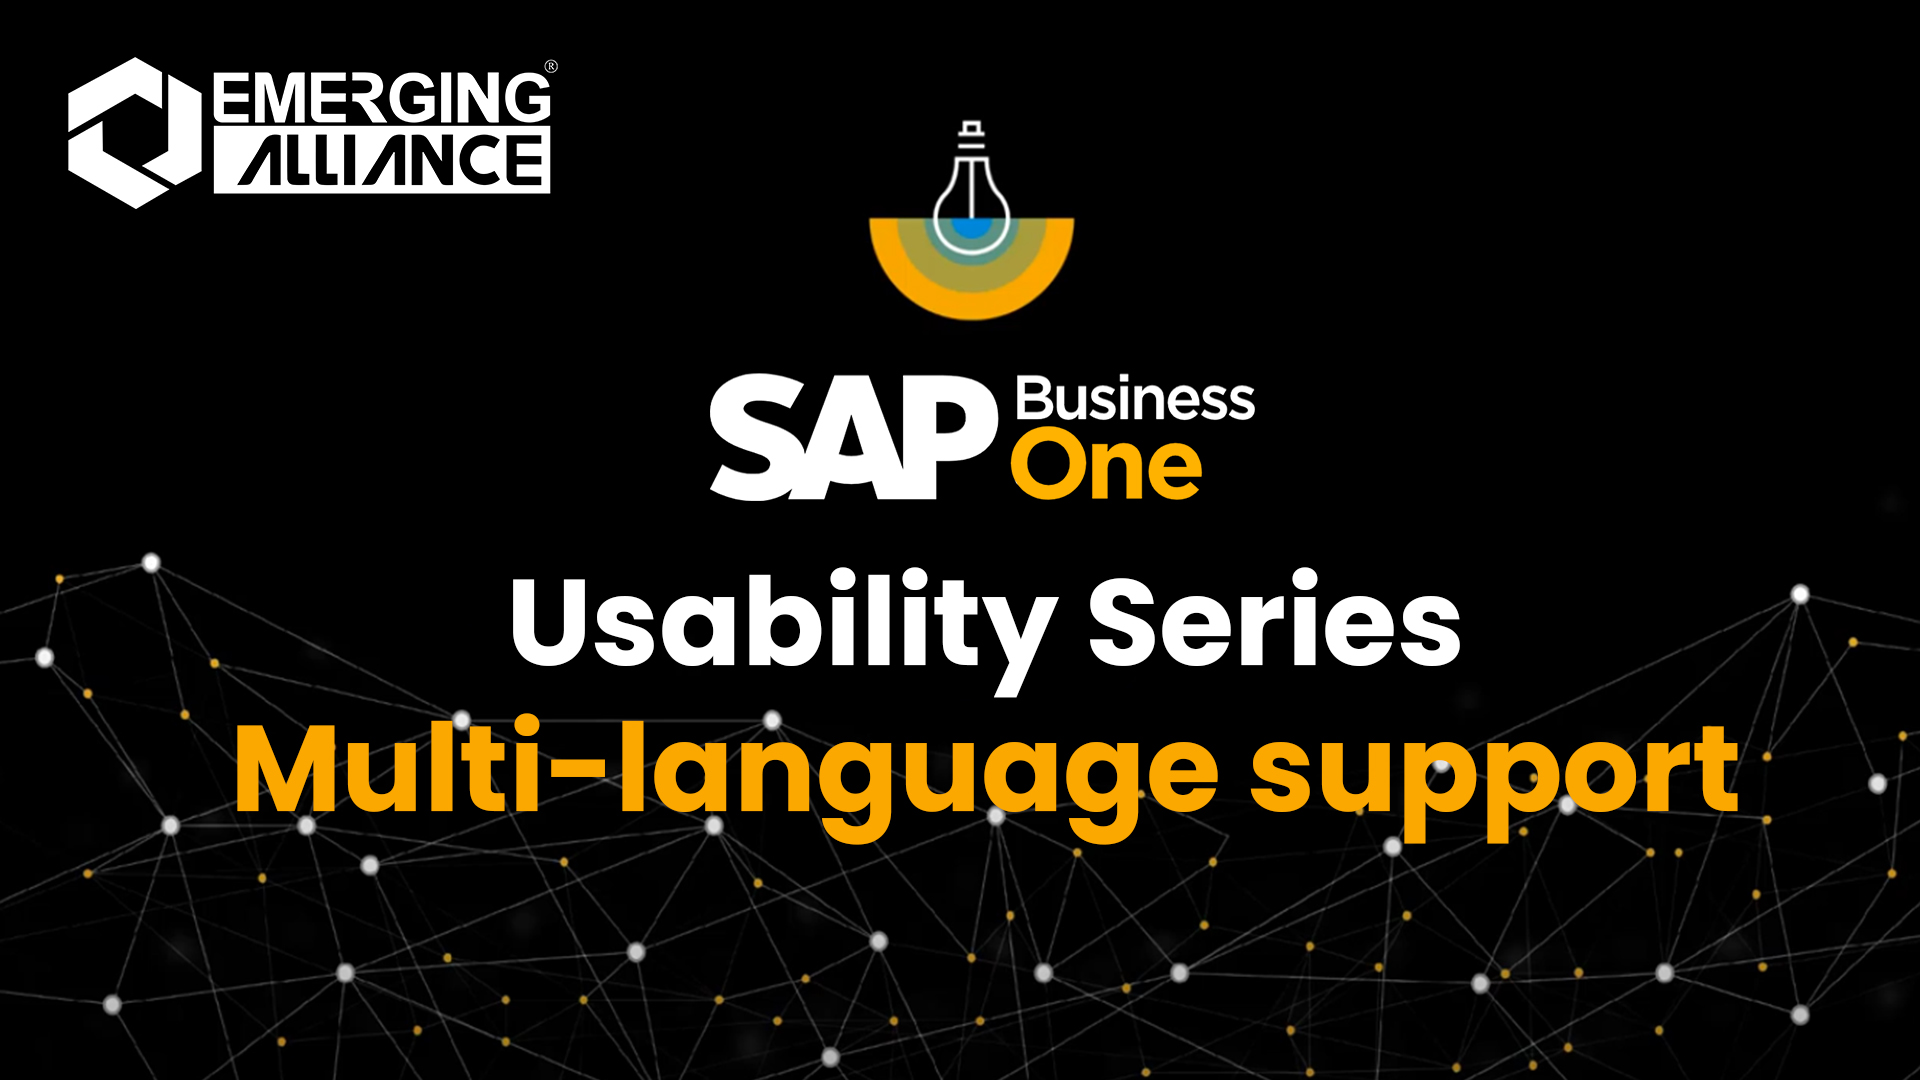 SAP Business One - Usability series multi-language